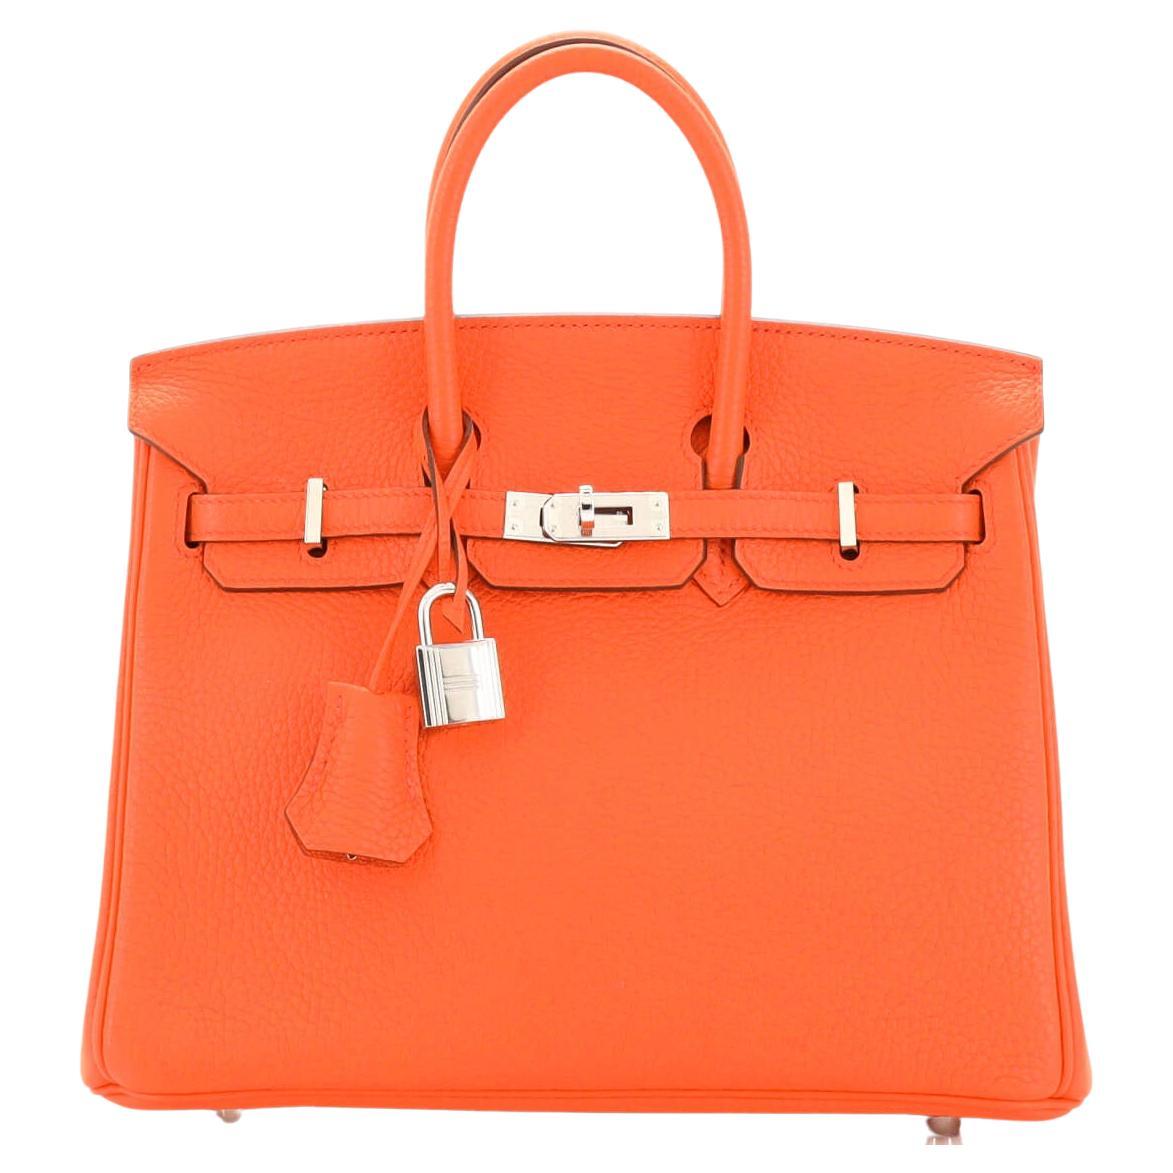 Hermes Birkin Handbag Orange Poppy Clemence with Palladium Hardware 25